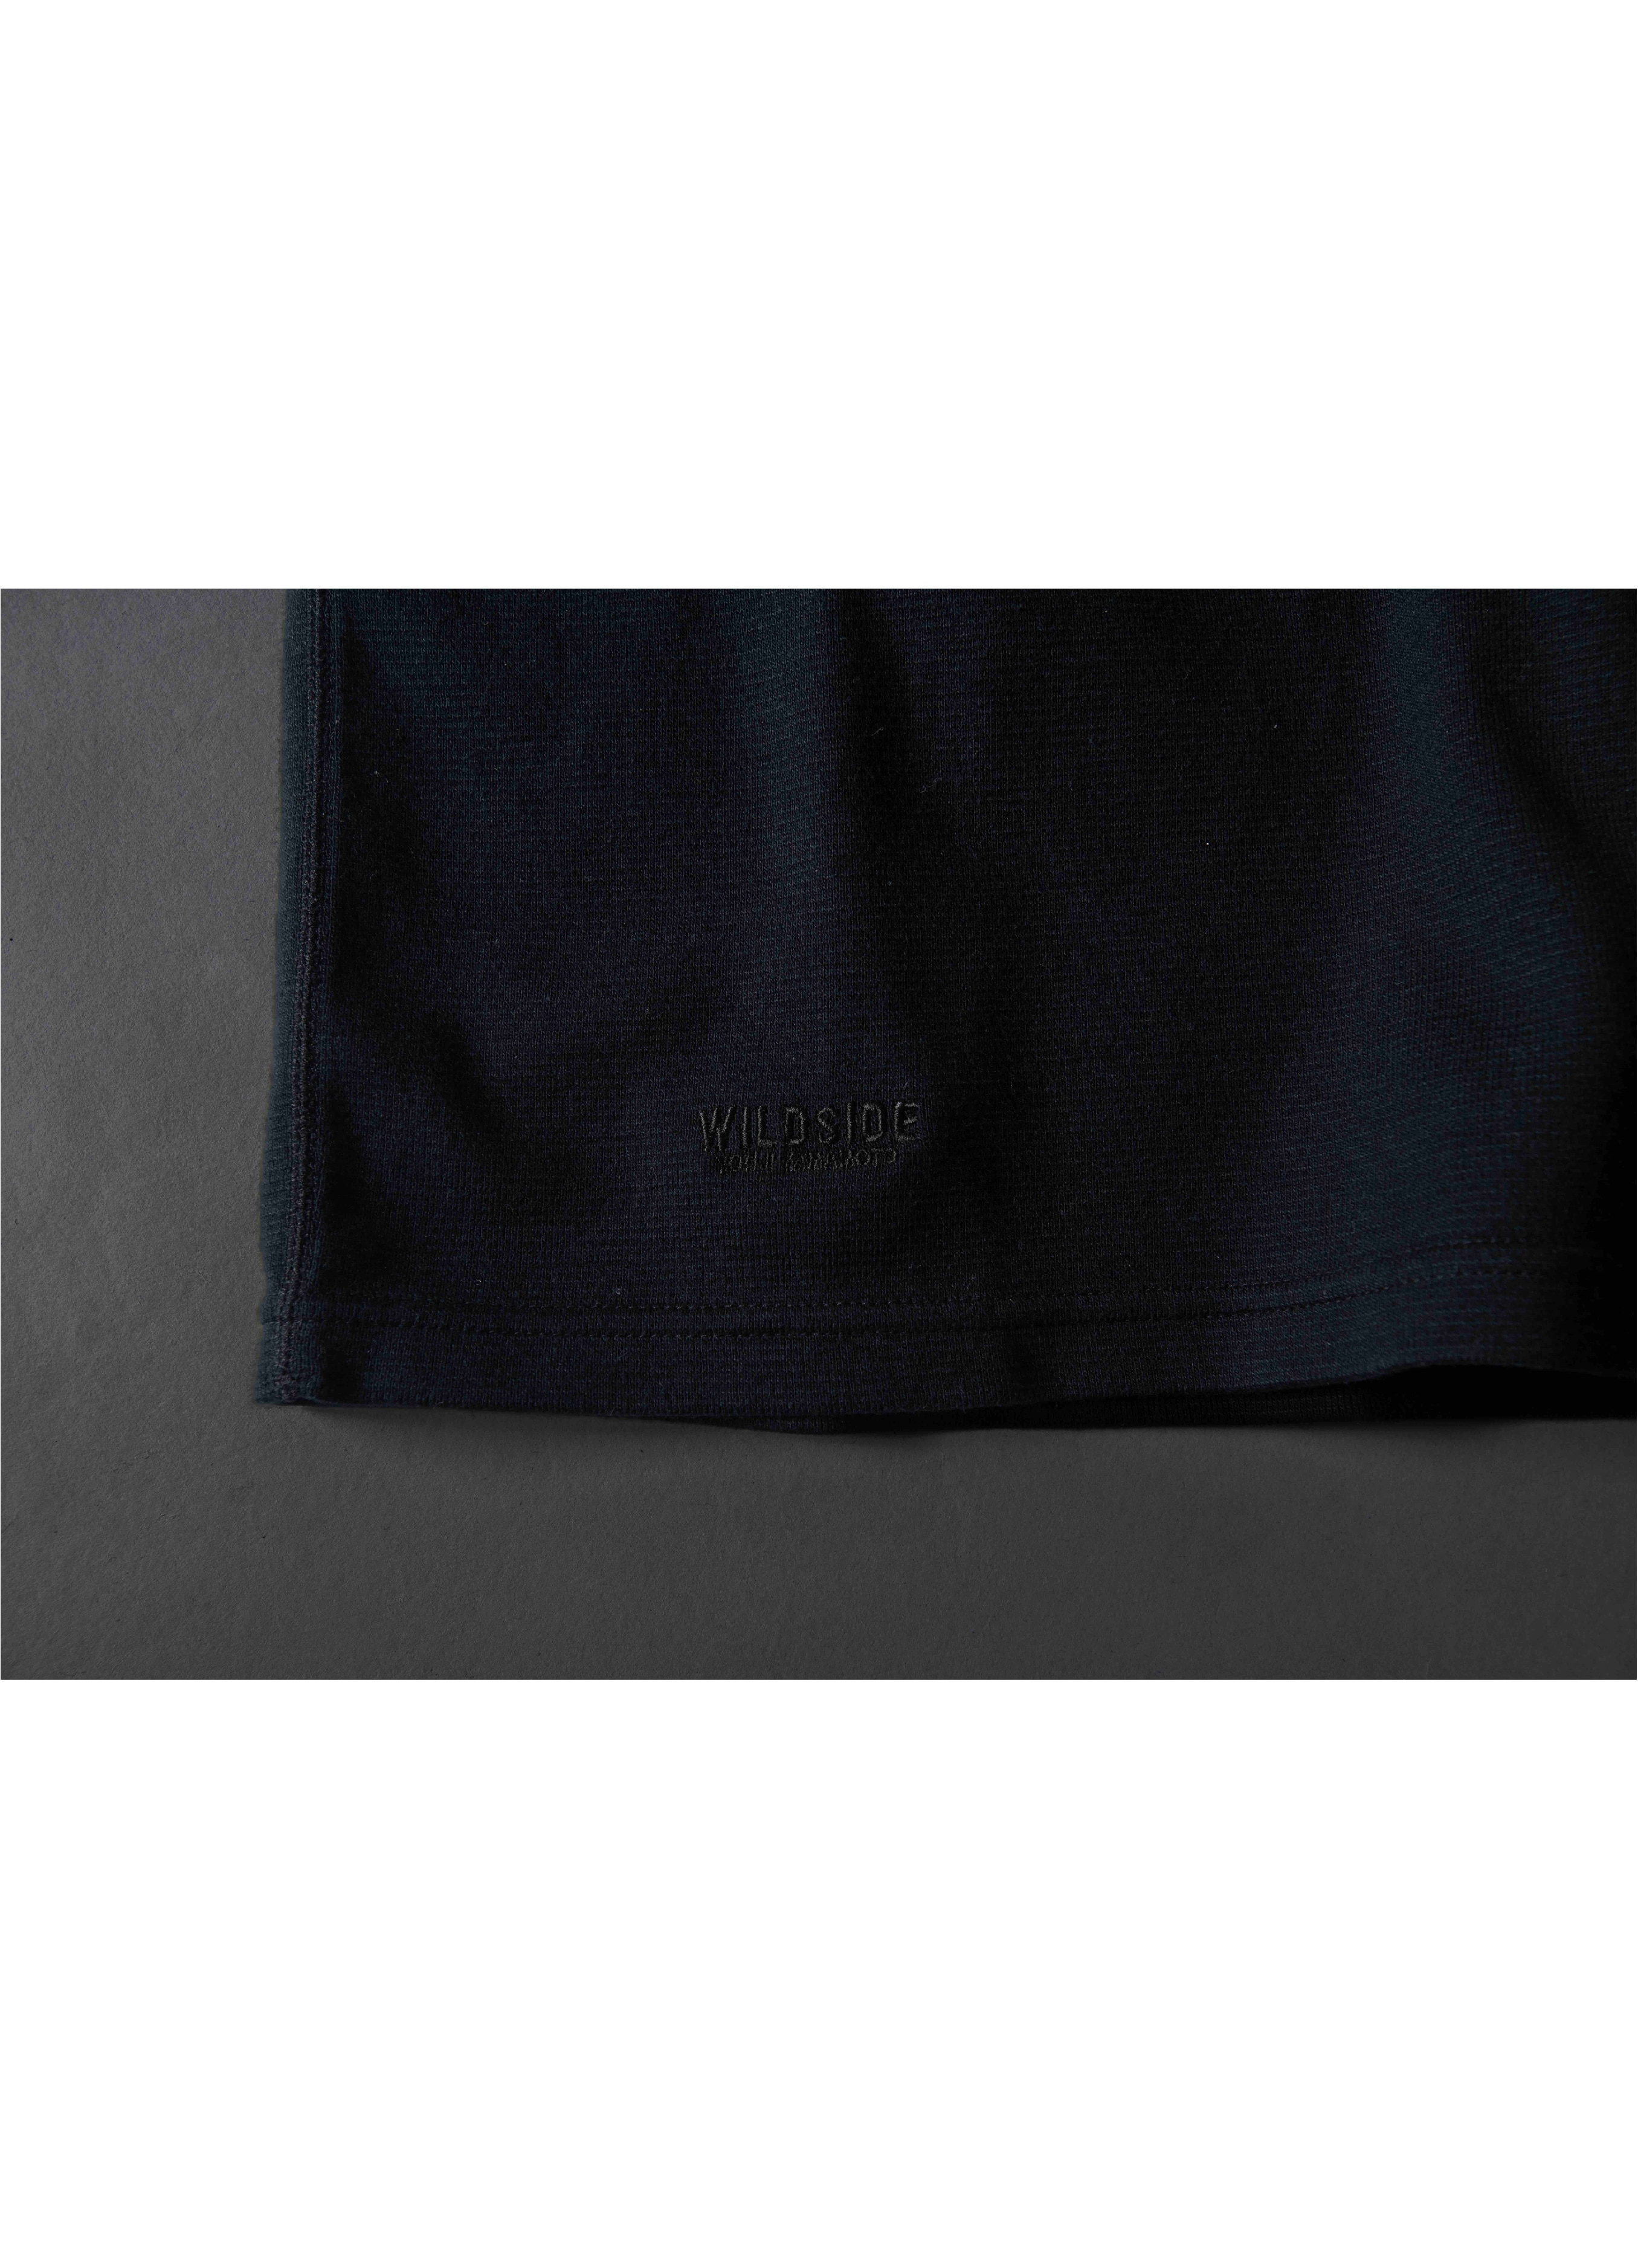 【6/12 12:00(JST) Release】WILDSIDE × HOLLYWOOD RANCH MARKET Stretech Fraise  Short Sleeve T-shirt